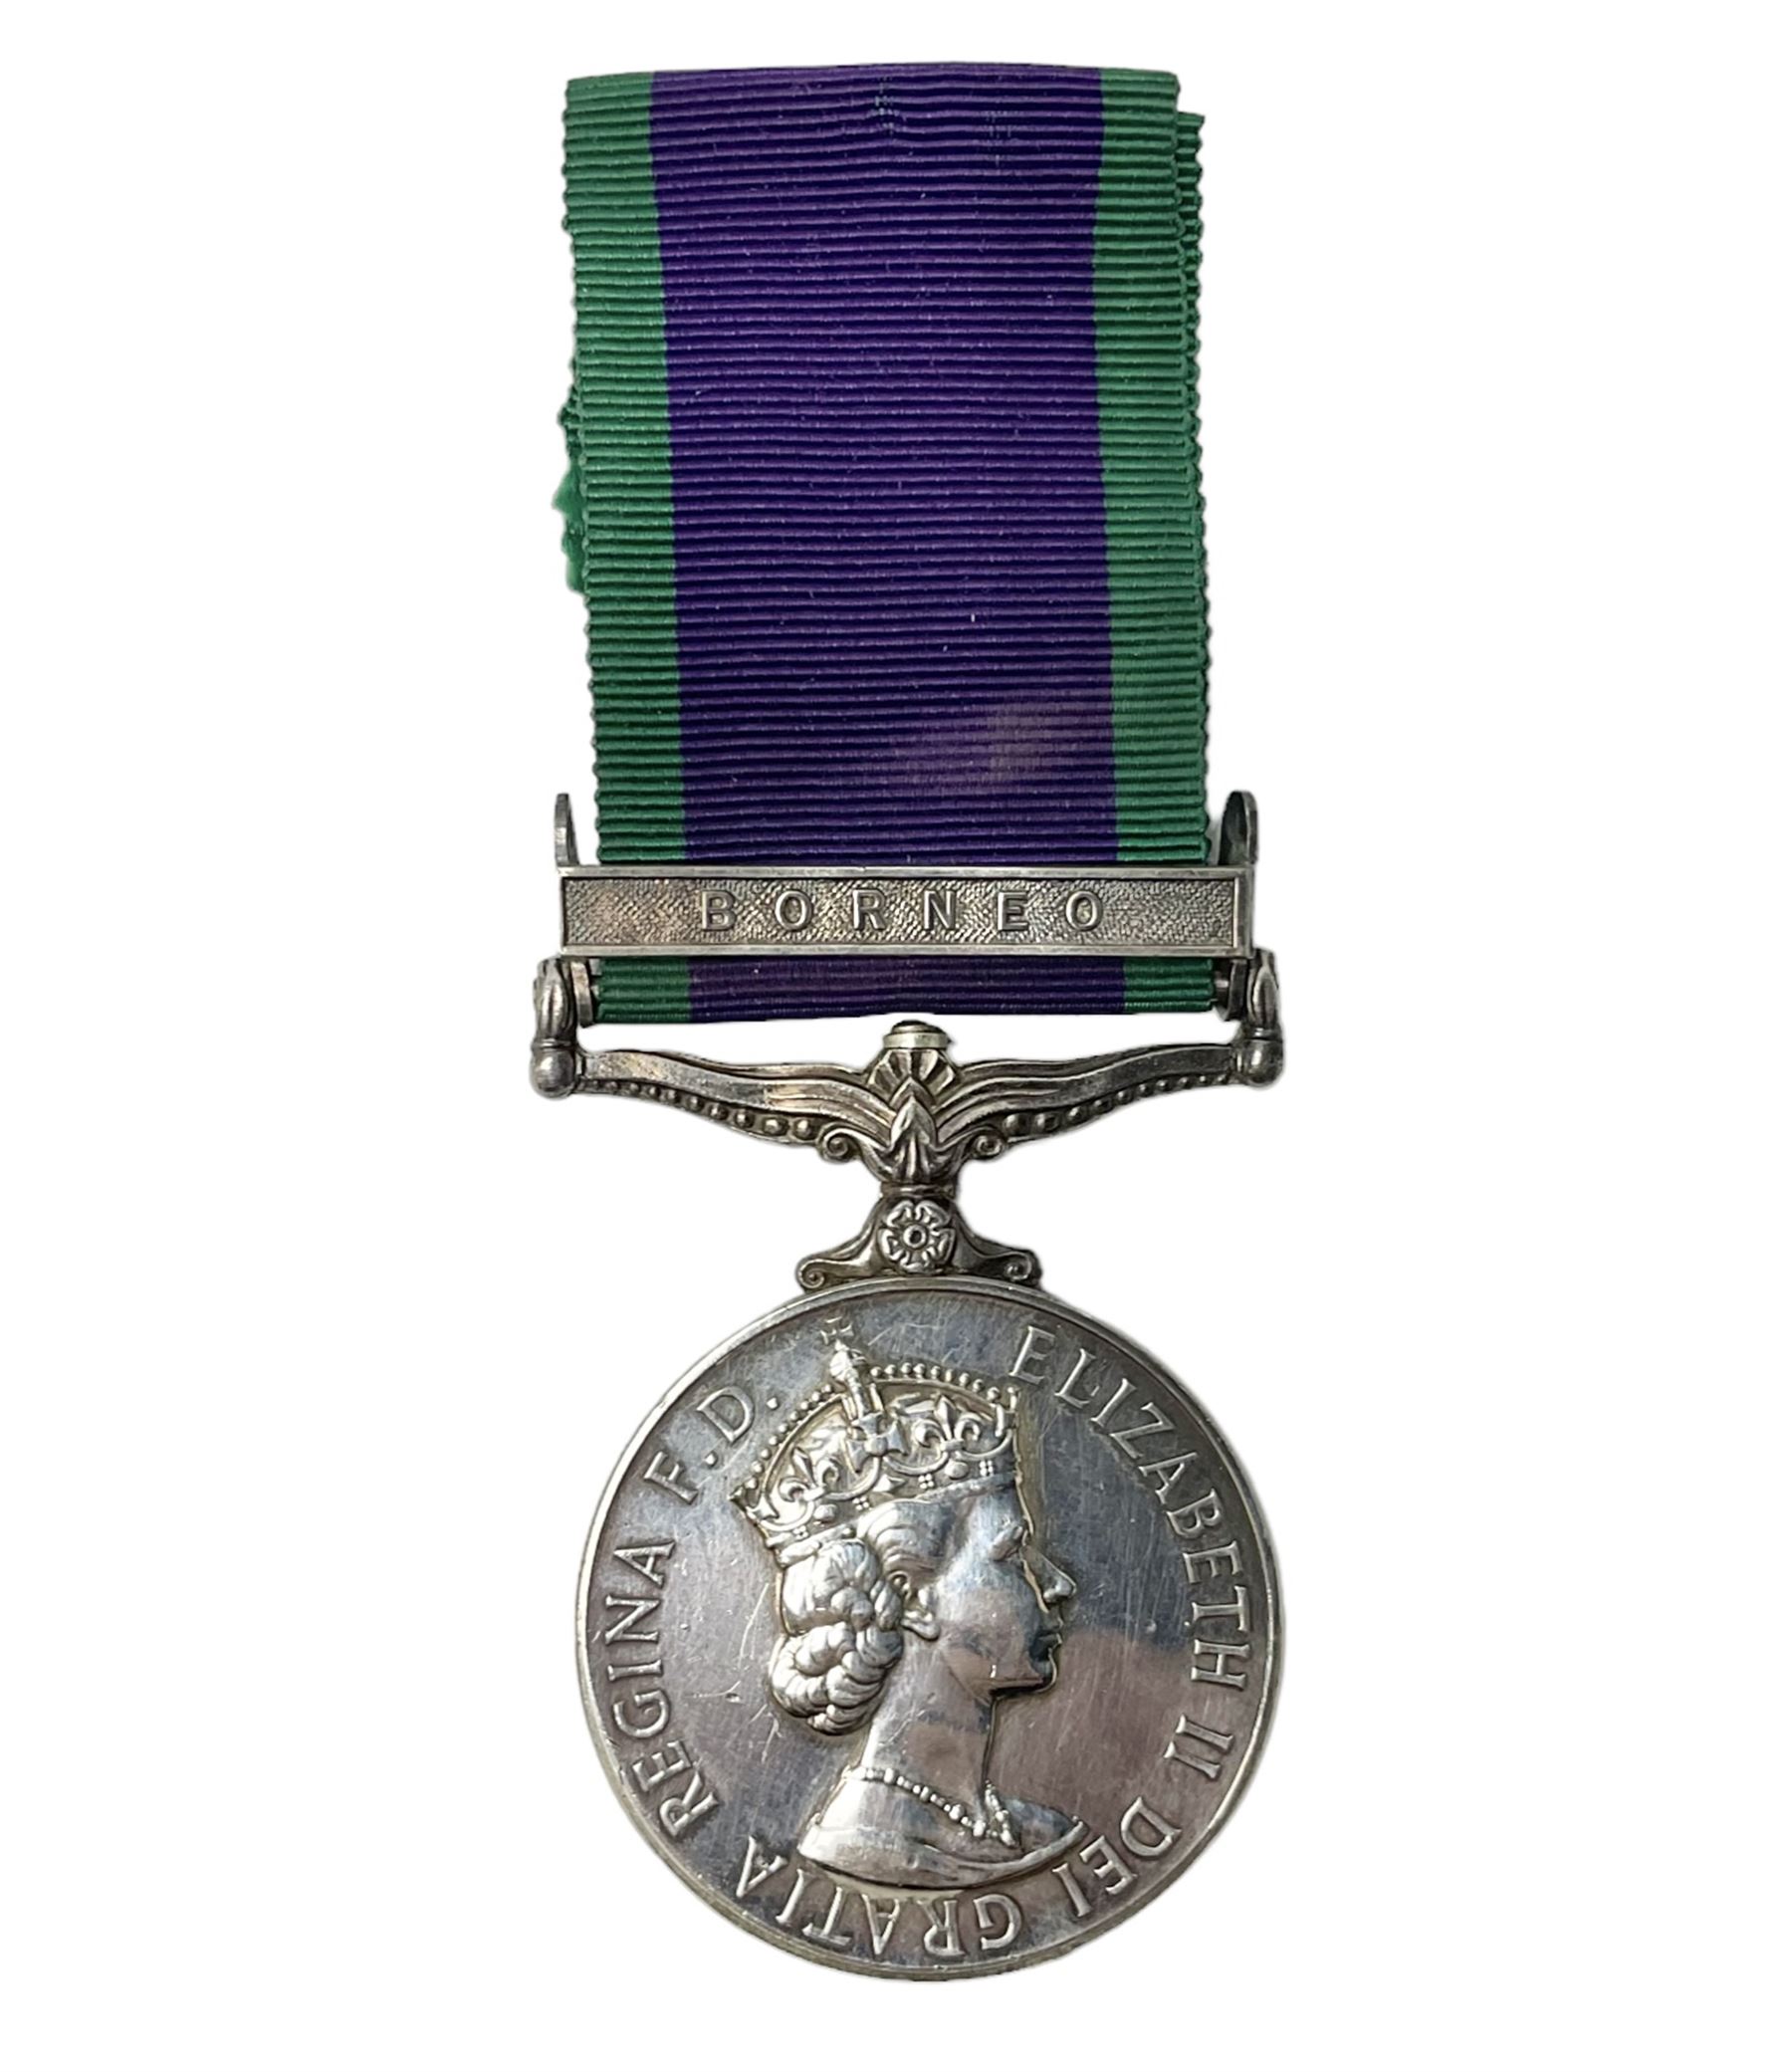 Elizabeth II General Service Medal with Borneo clasp awarded to 23919414 Pte. J.N. McKenna RAOC; wit